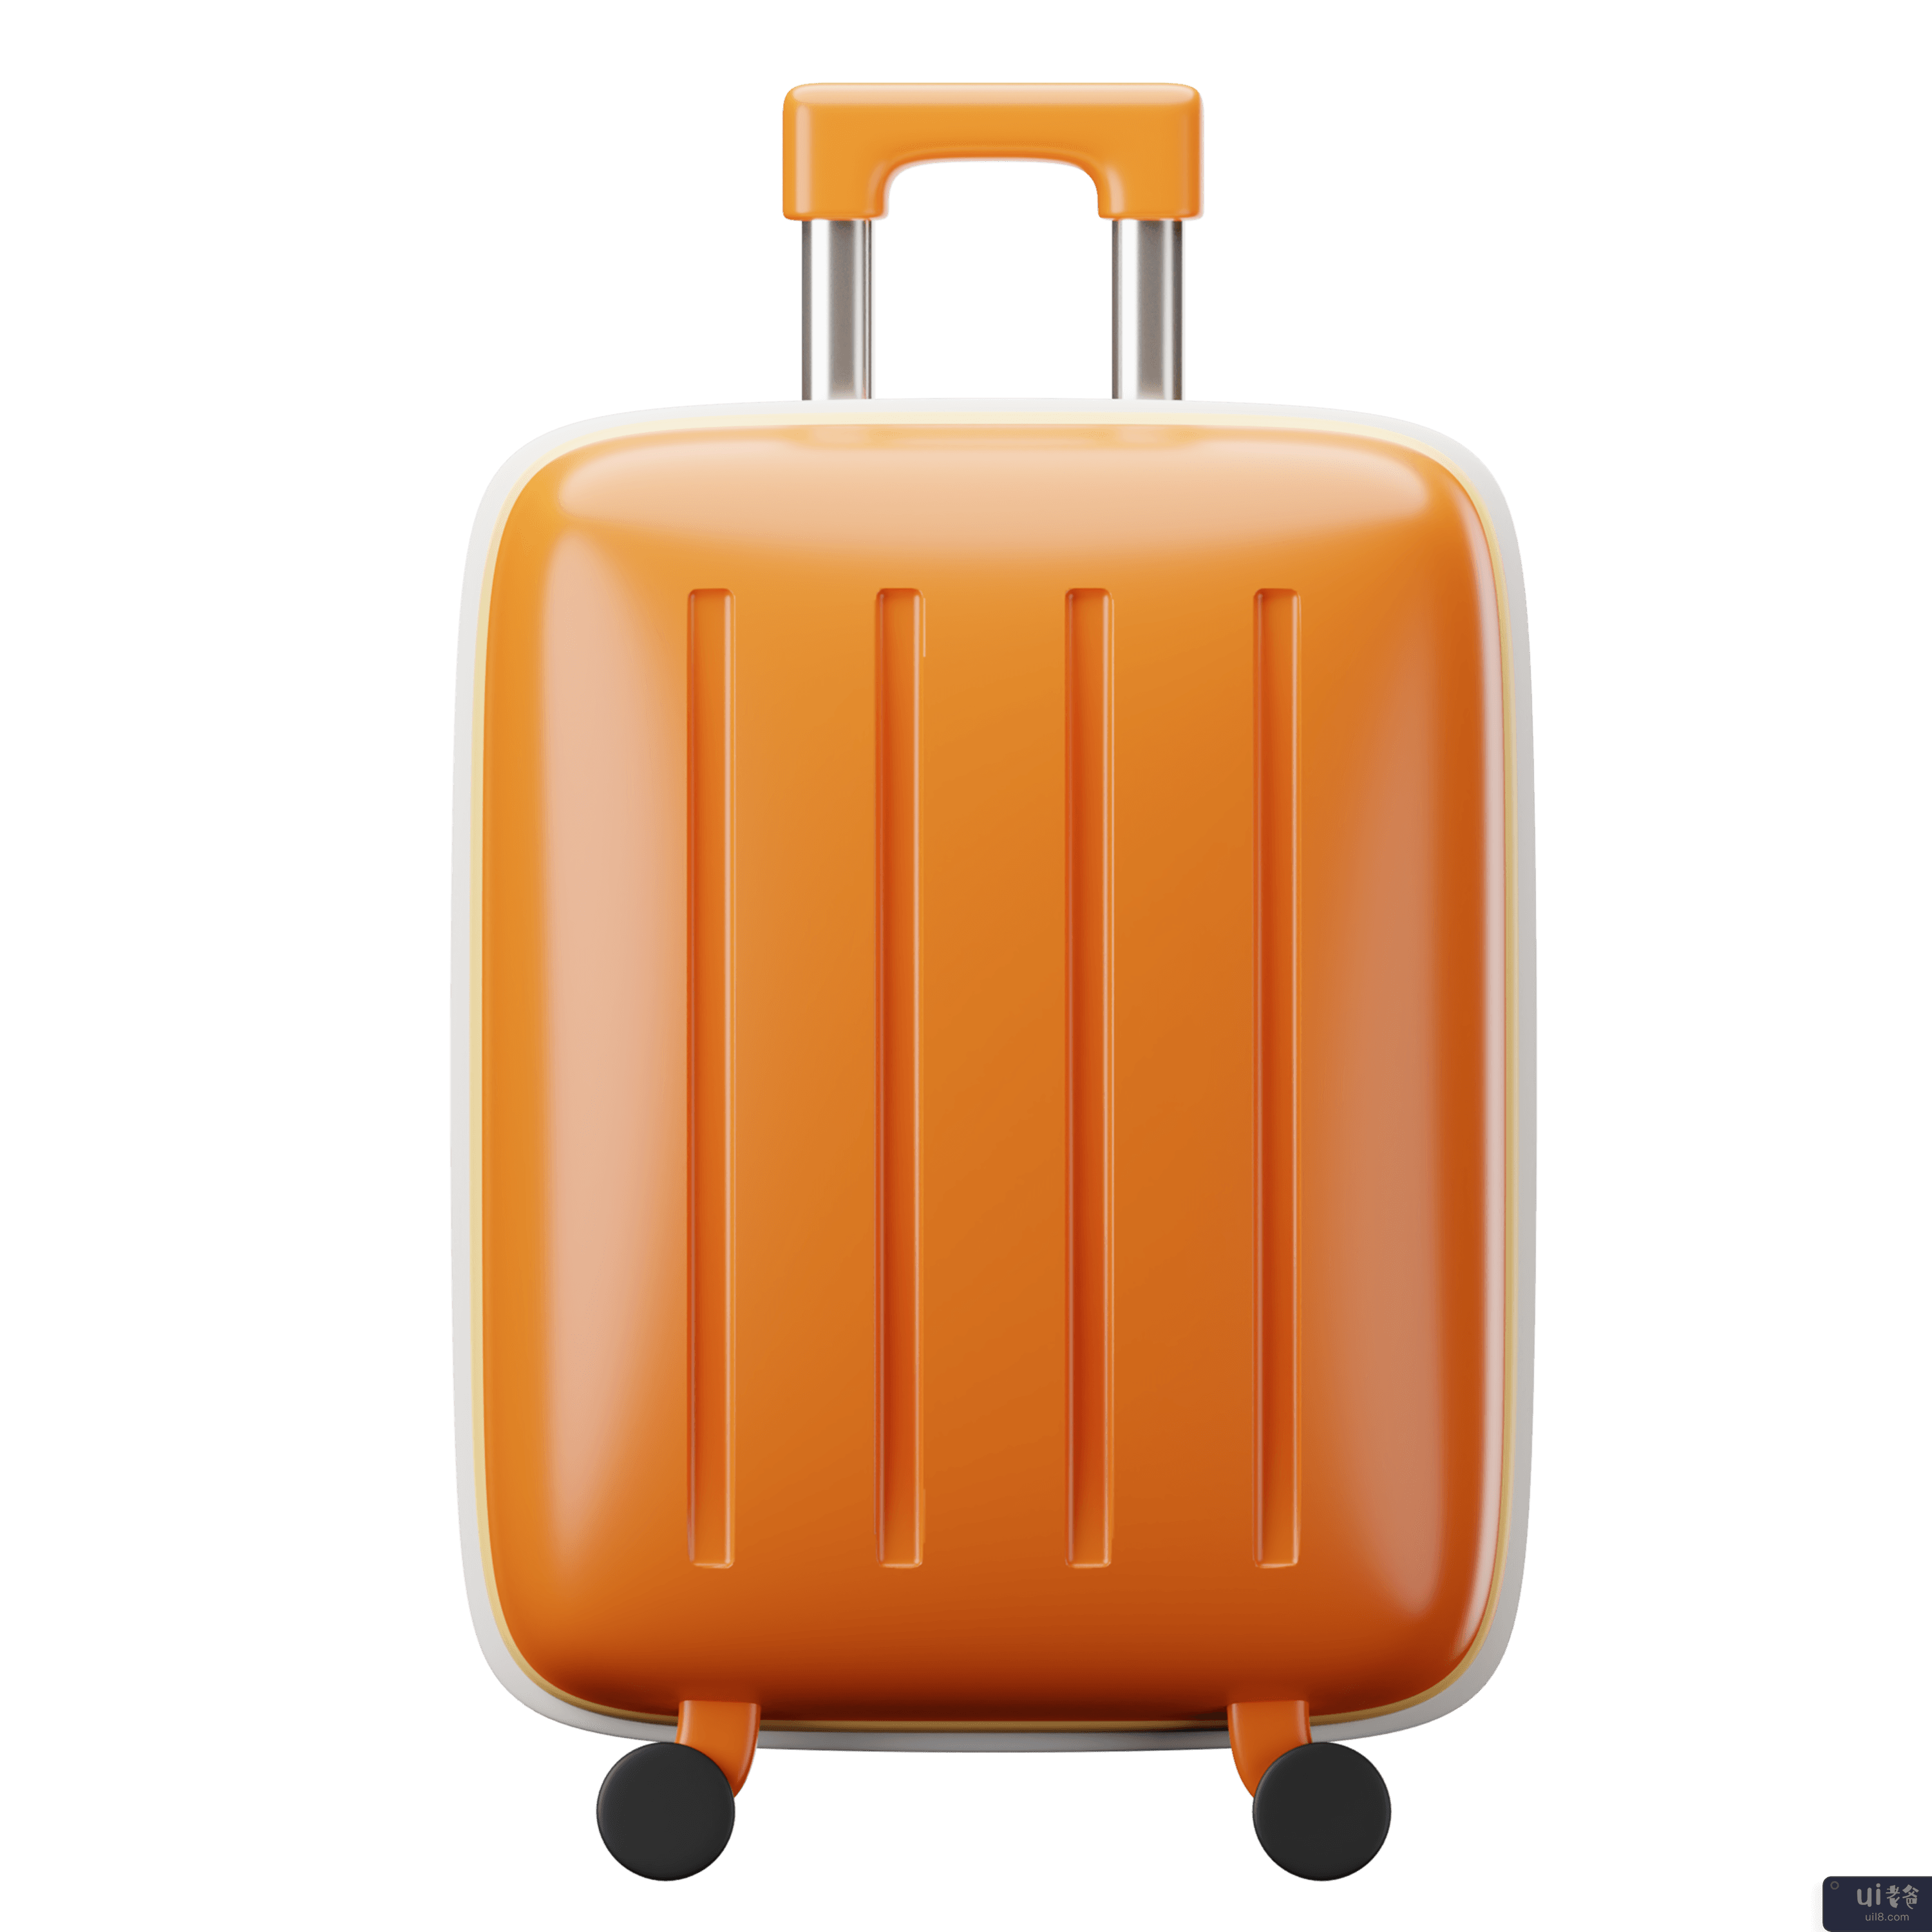 3D 旅行和假期插图包 - 手提箱(3D Travel and Holidays Illustration Pack - Suitcase)插图